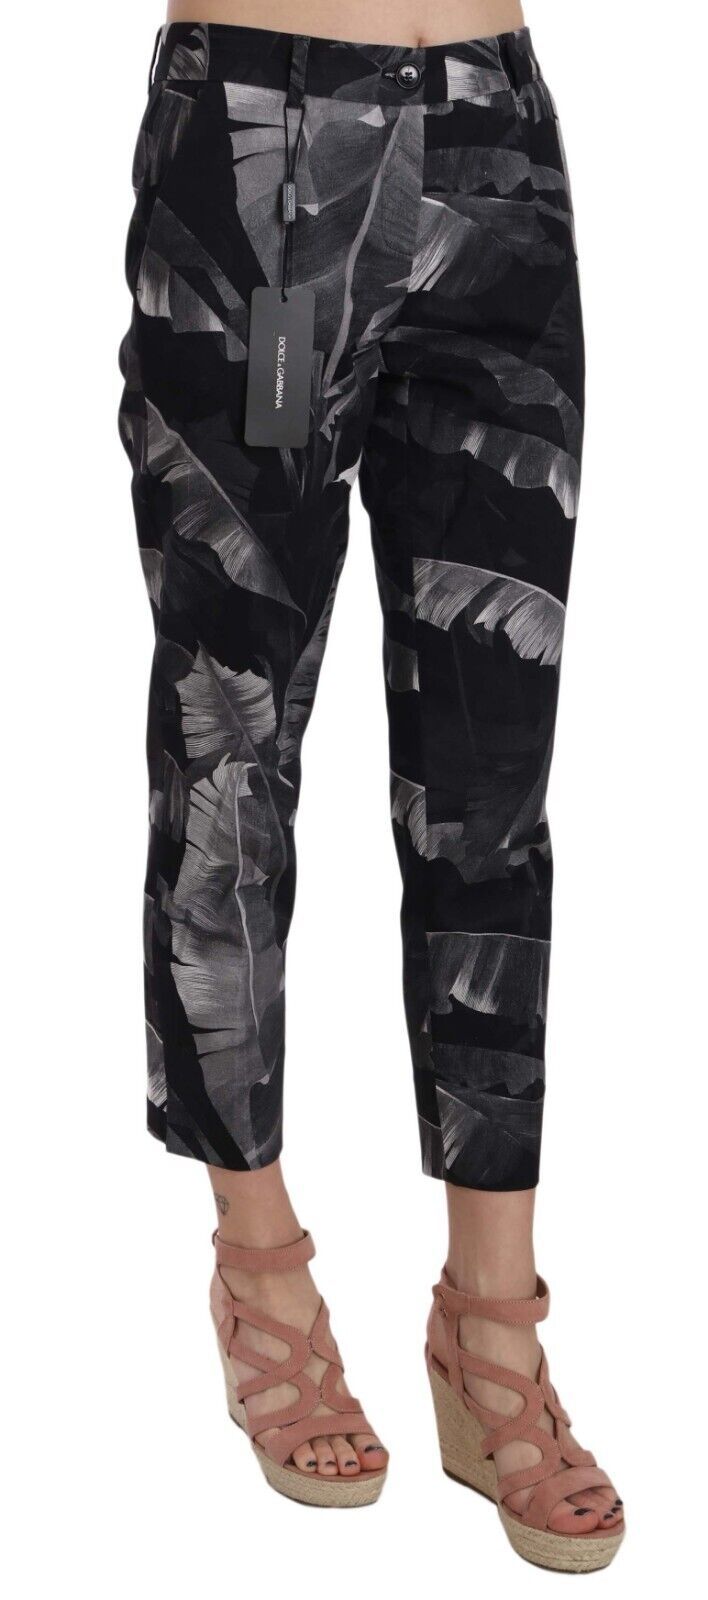 Dolce & Gabbana Black Banana Leaf Print Skinny Capri Pants